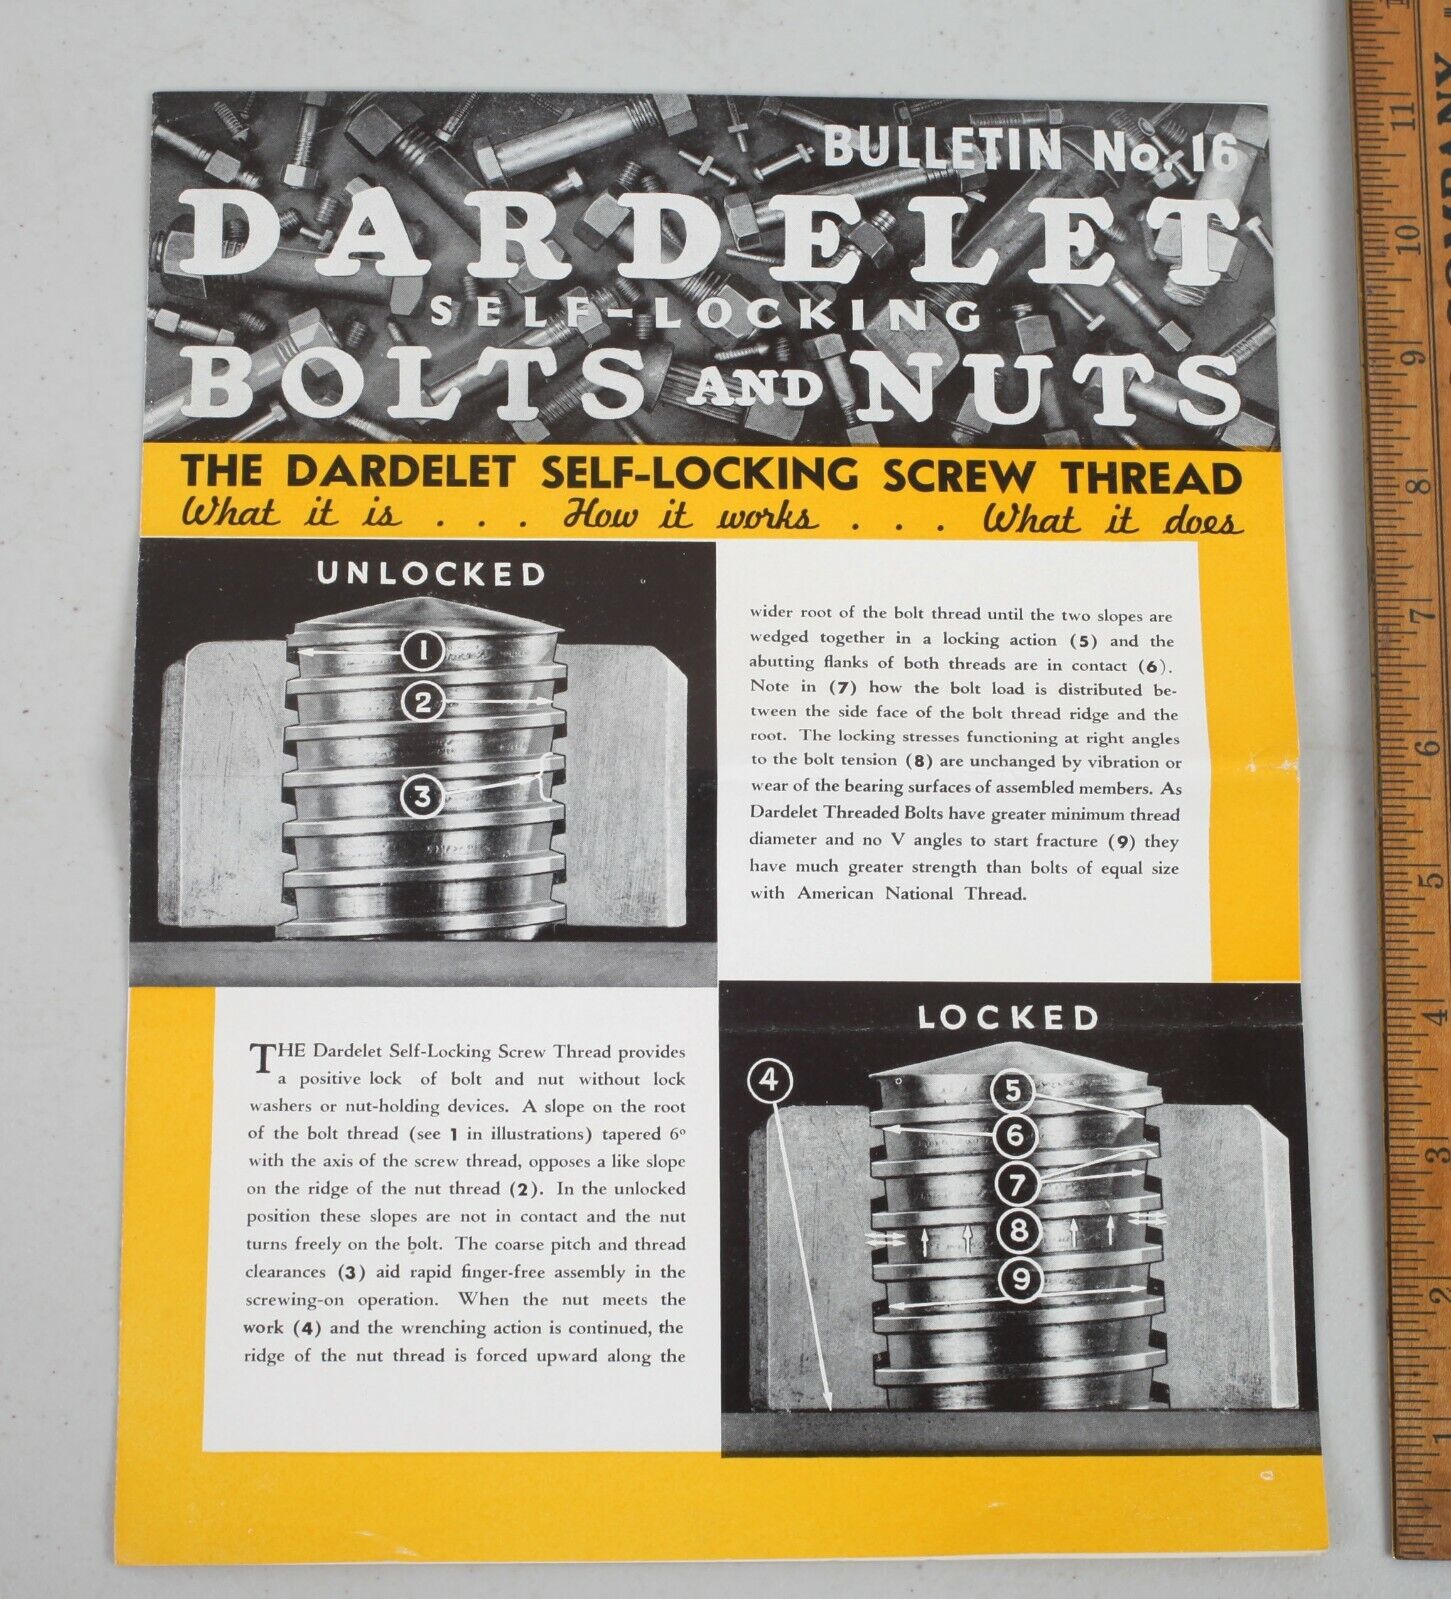 Vintage Dardelet Self-Locking Bolts & Nuts Bulletin No. 16 Threadlock Brochure 